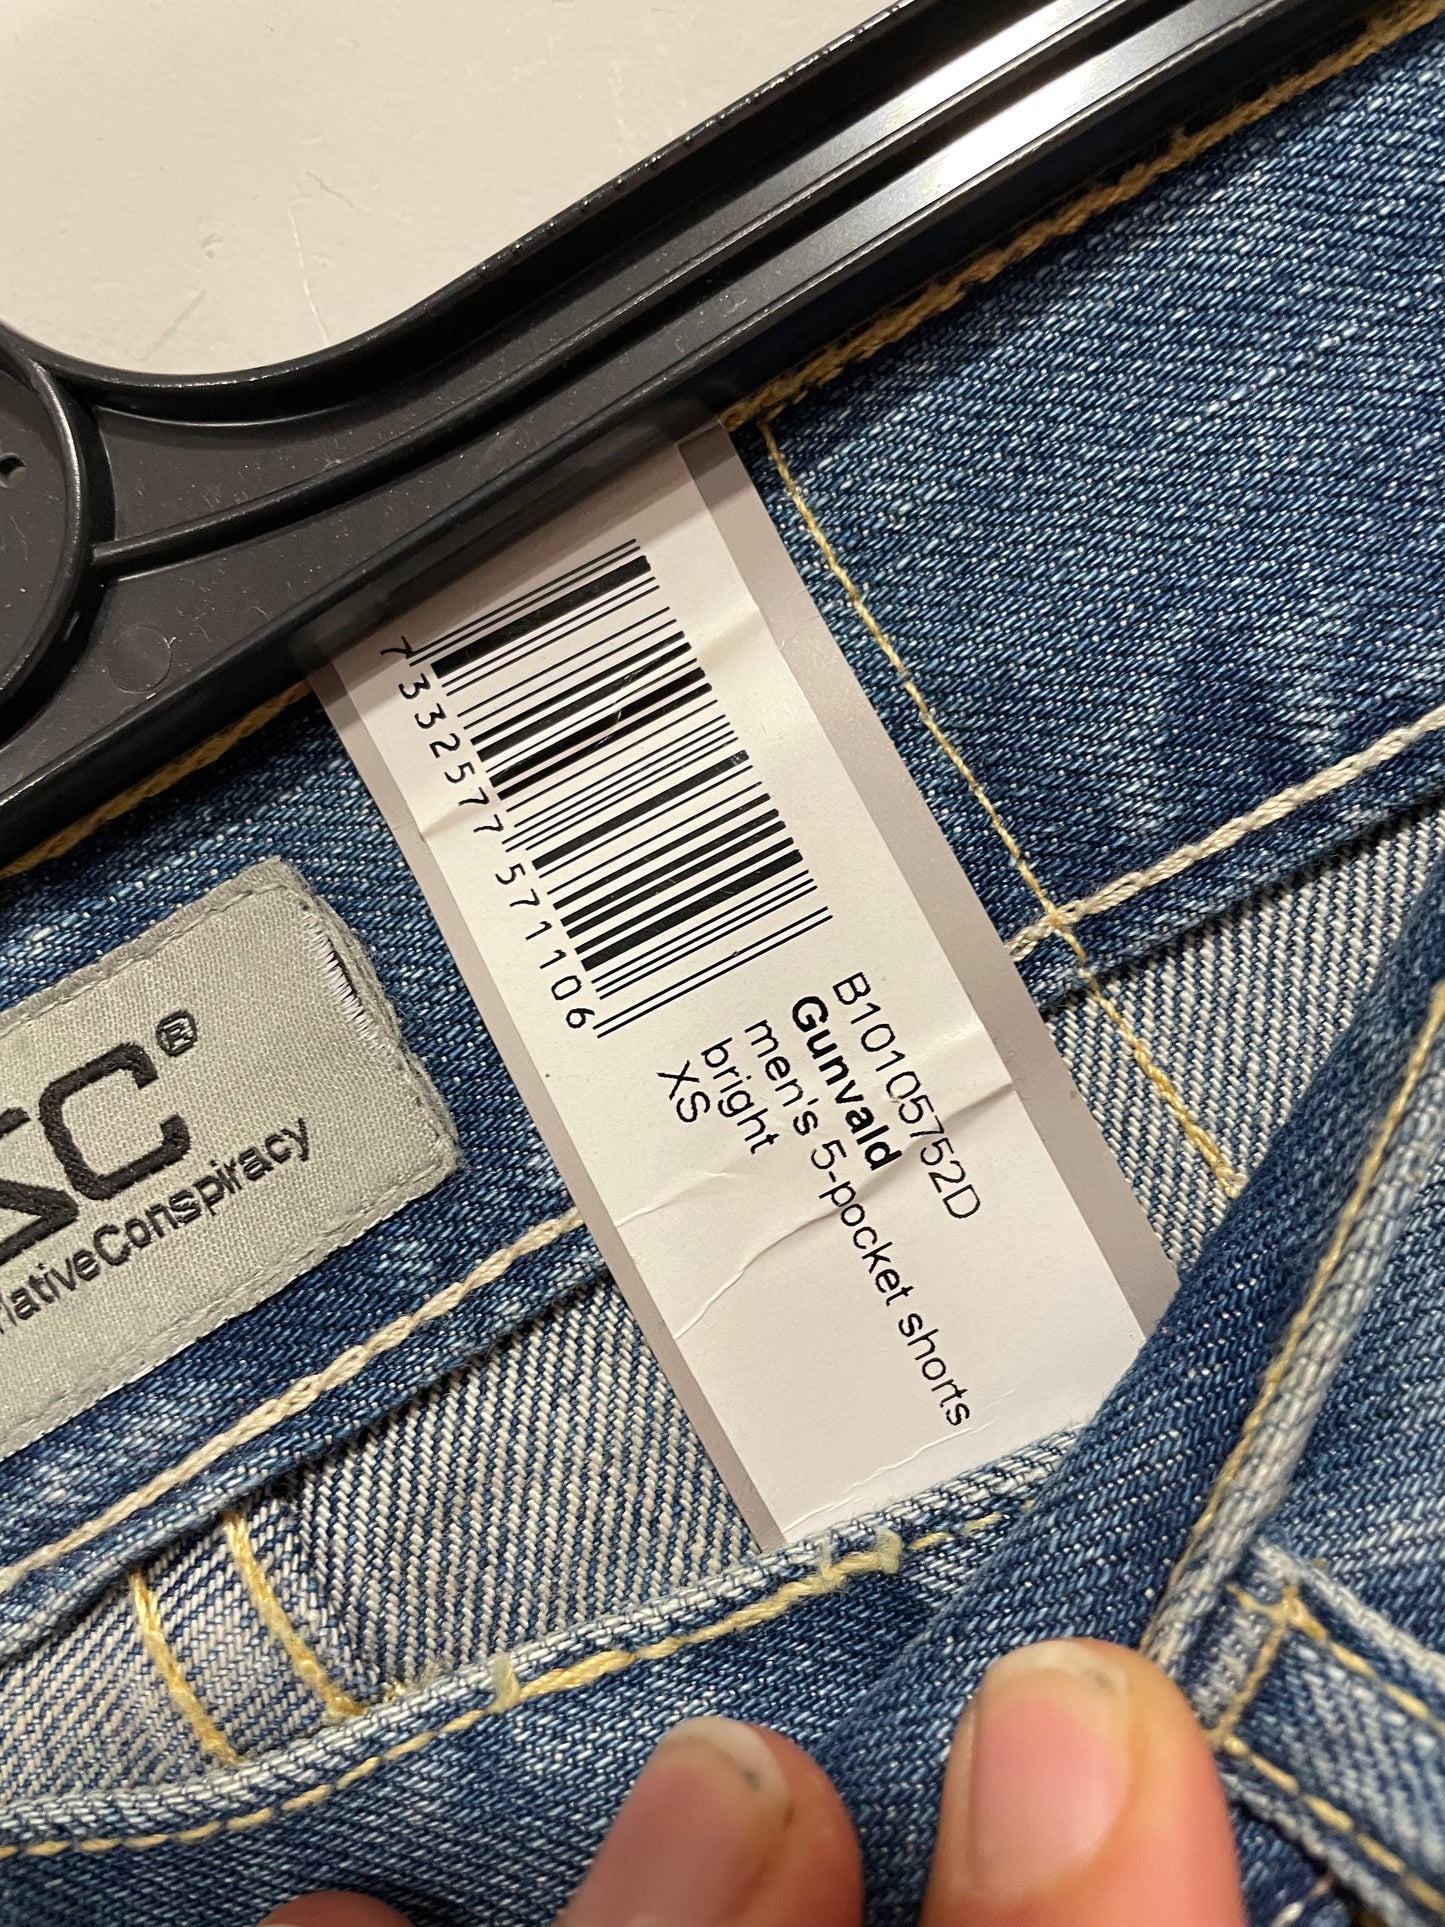 Shorts in jeans Wesc nuovi con cartellino (D683)